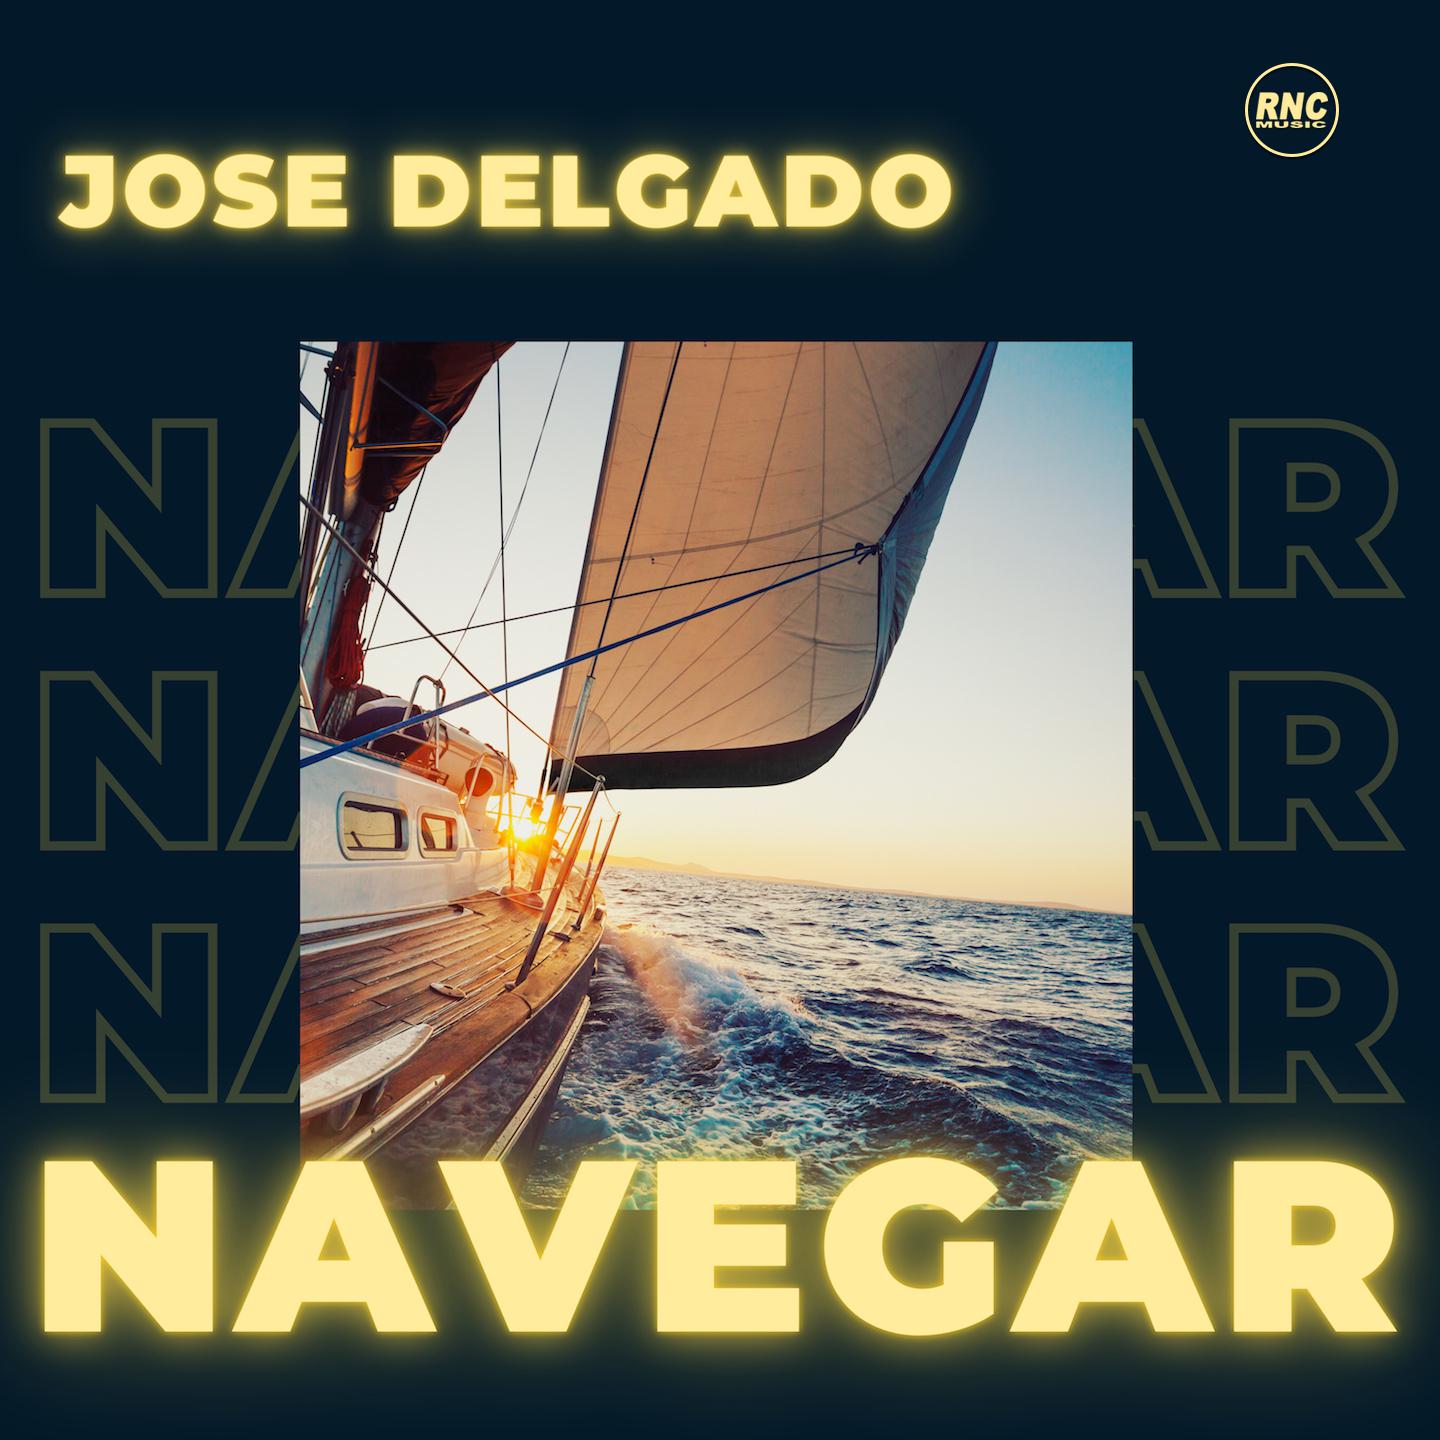 Jose Delgado - Navegar (Radio Edit)